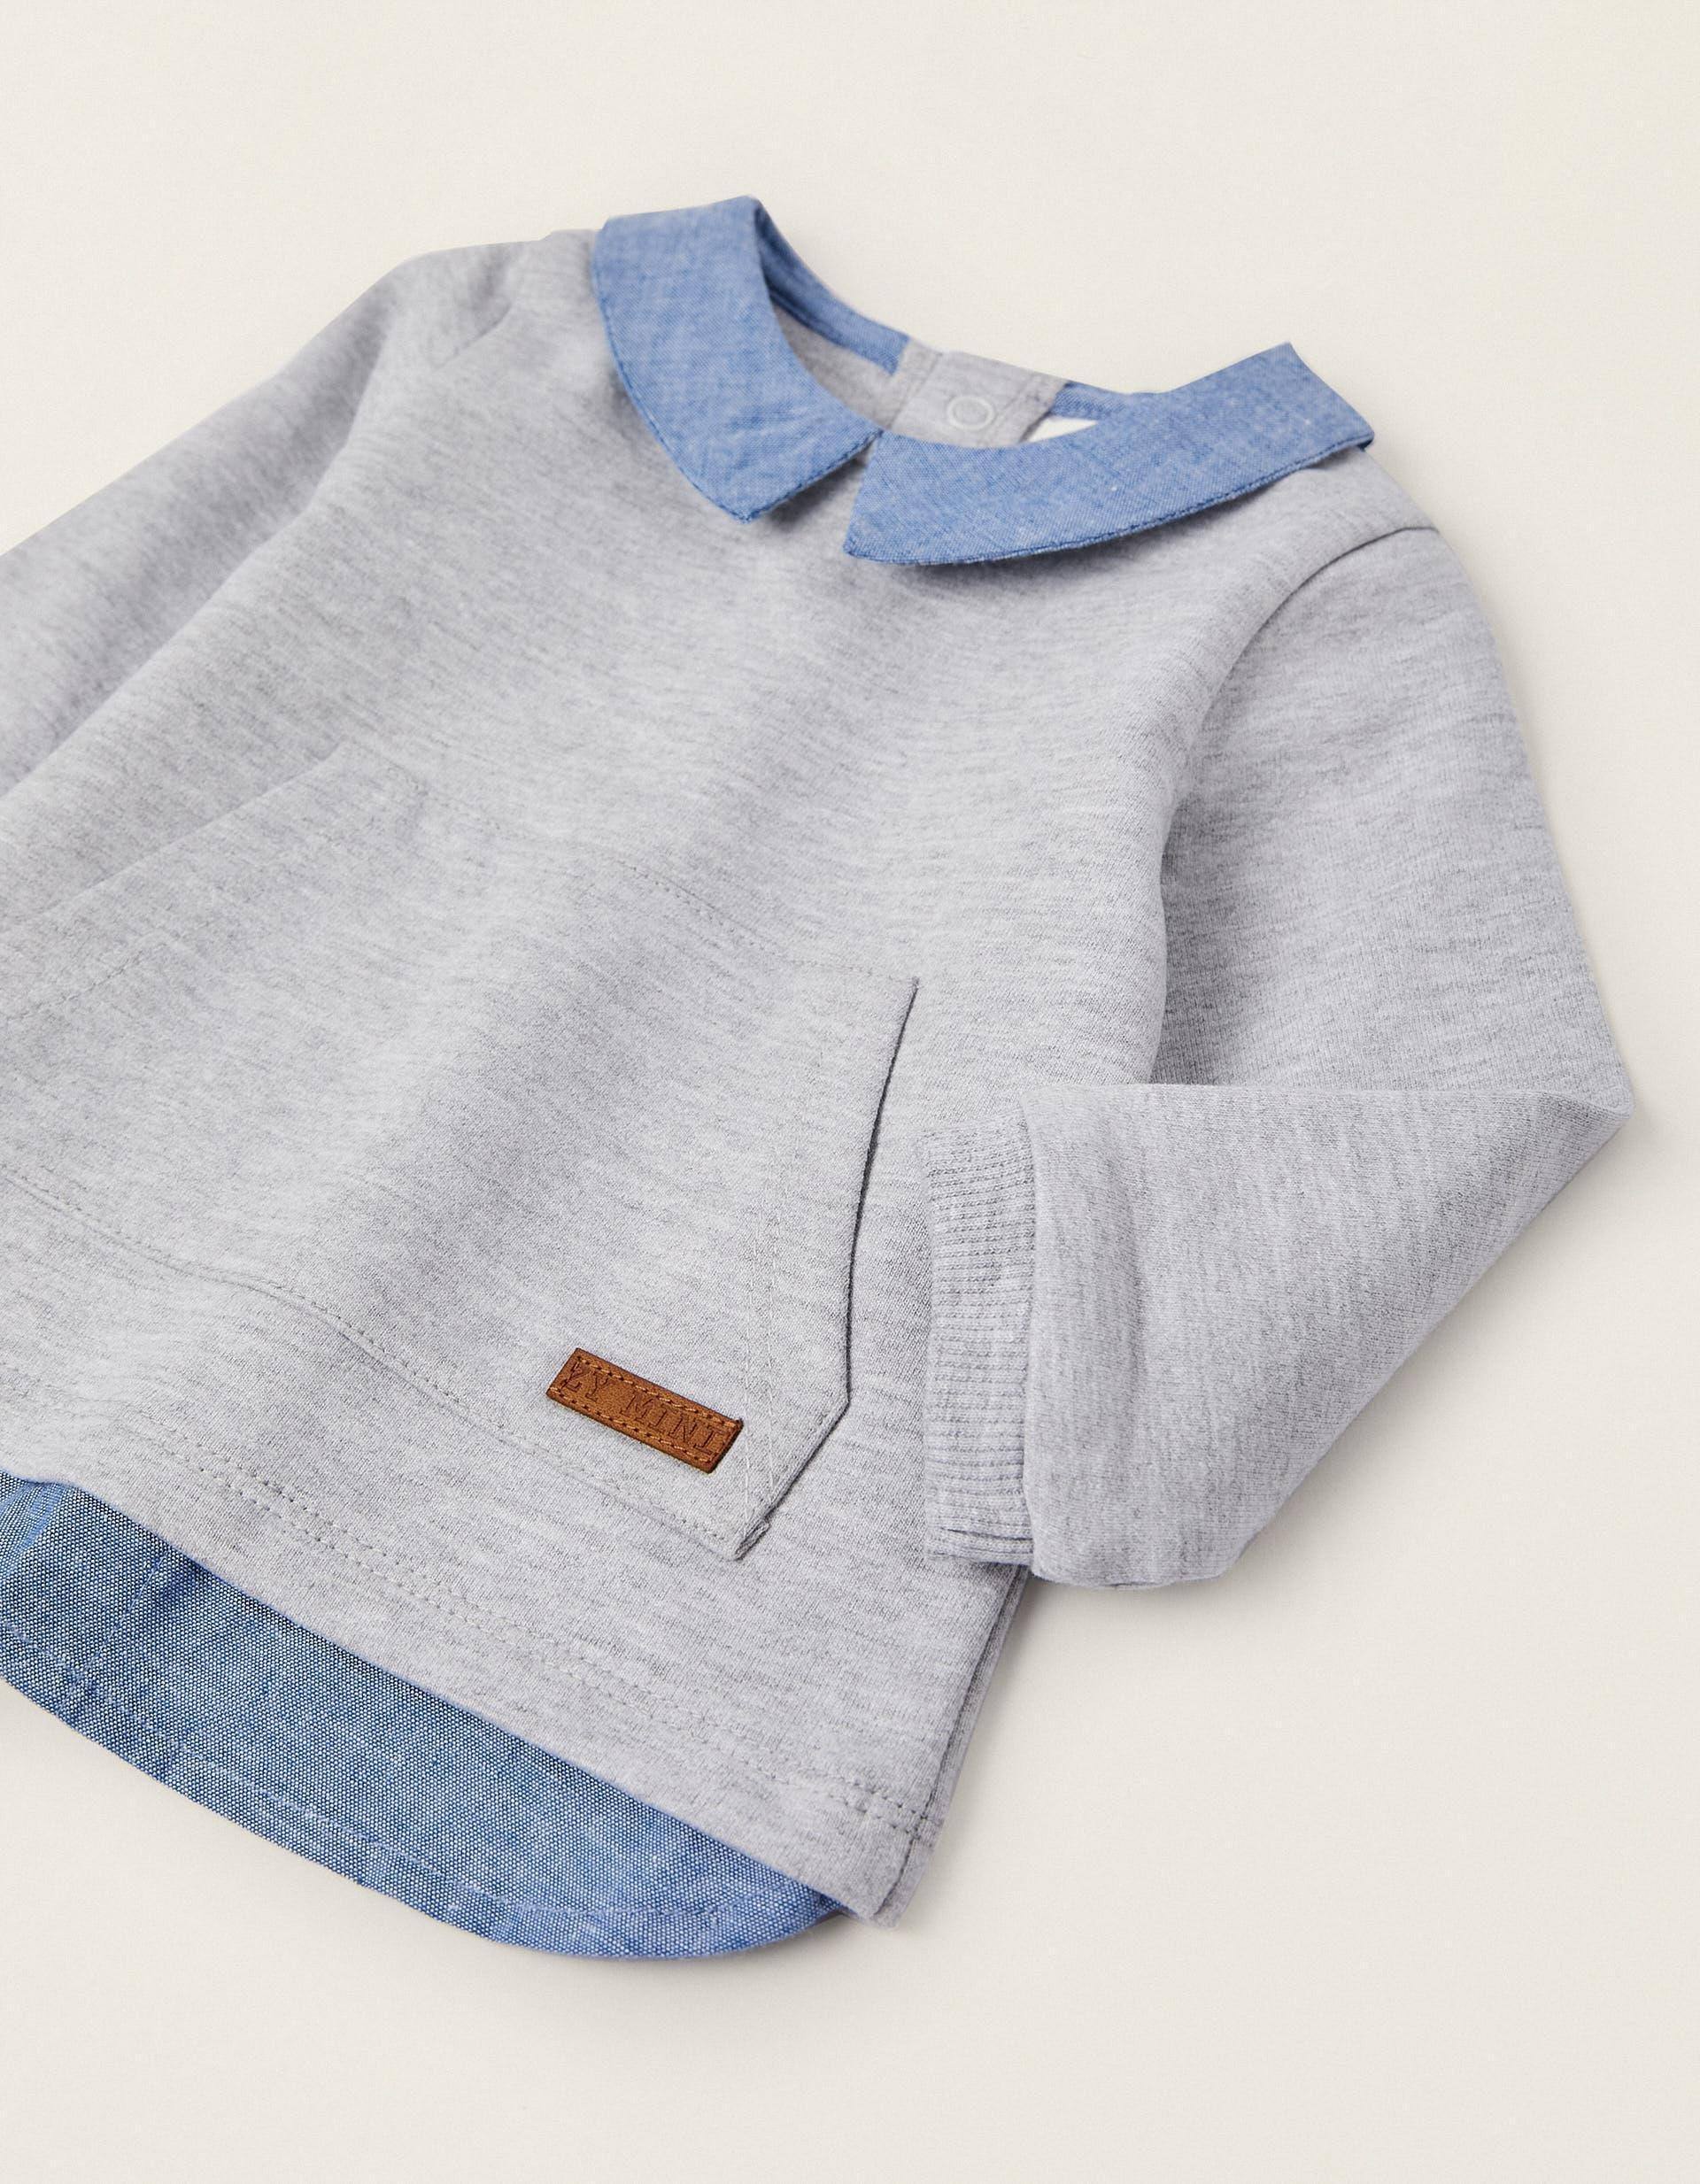 Zippy - Grey Cotton 2 In 1 Sweatshirt, Baby Unisex